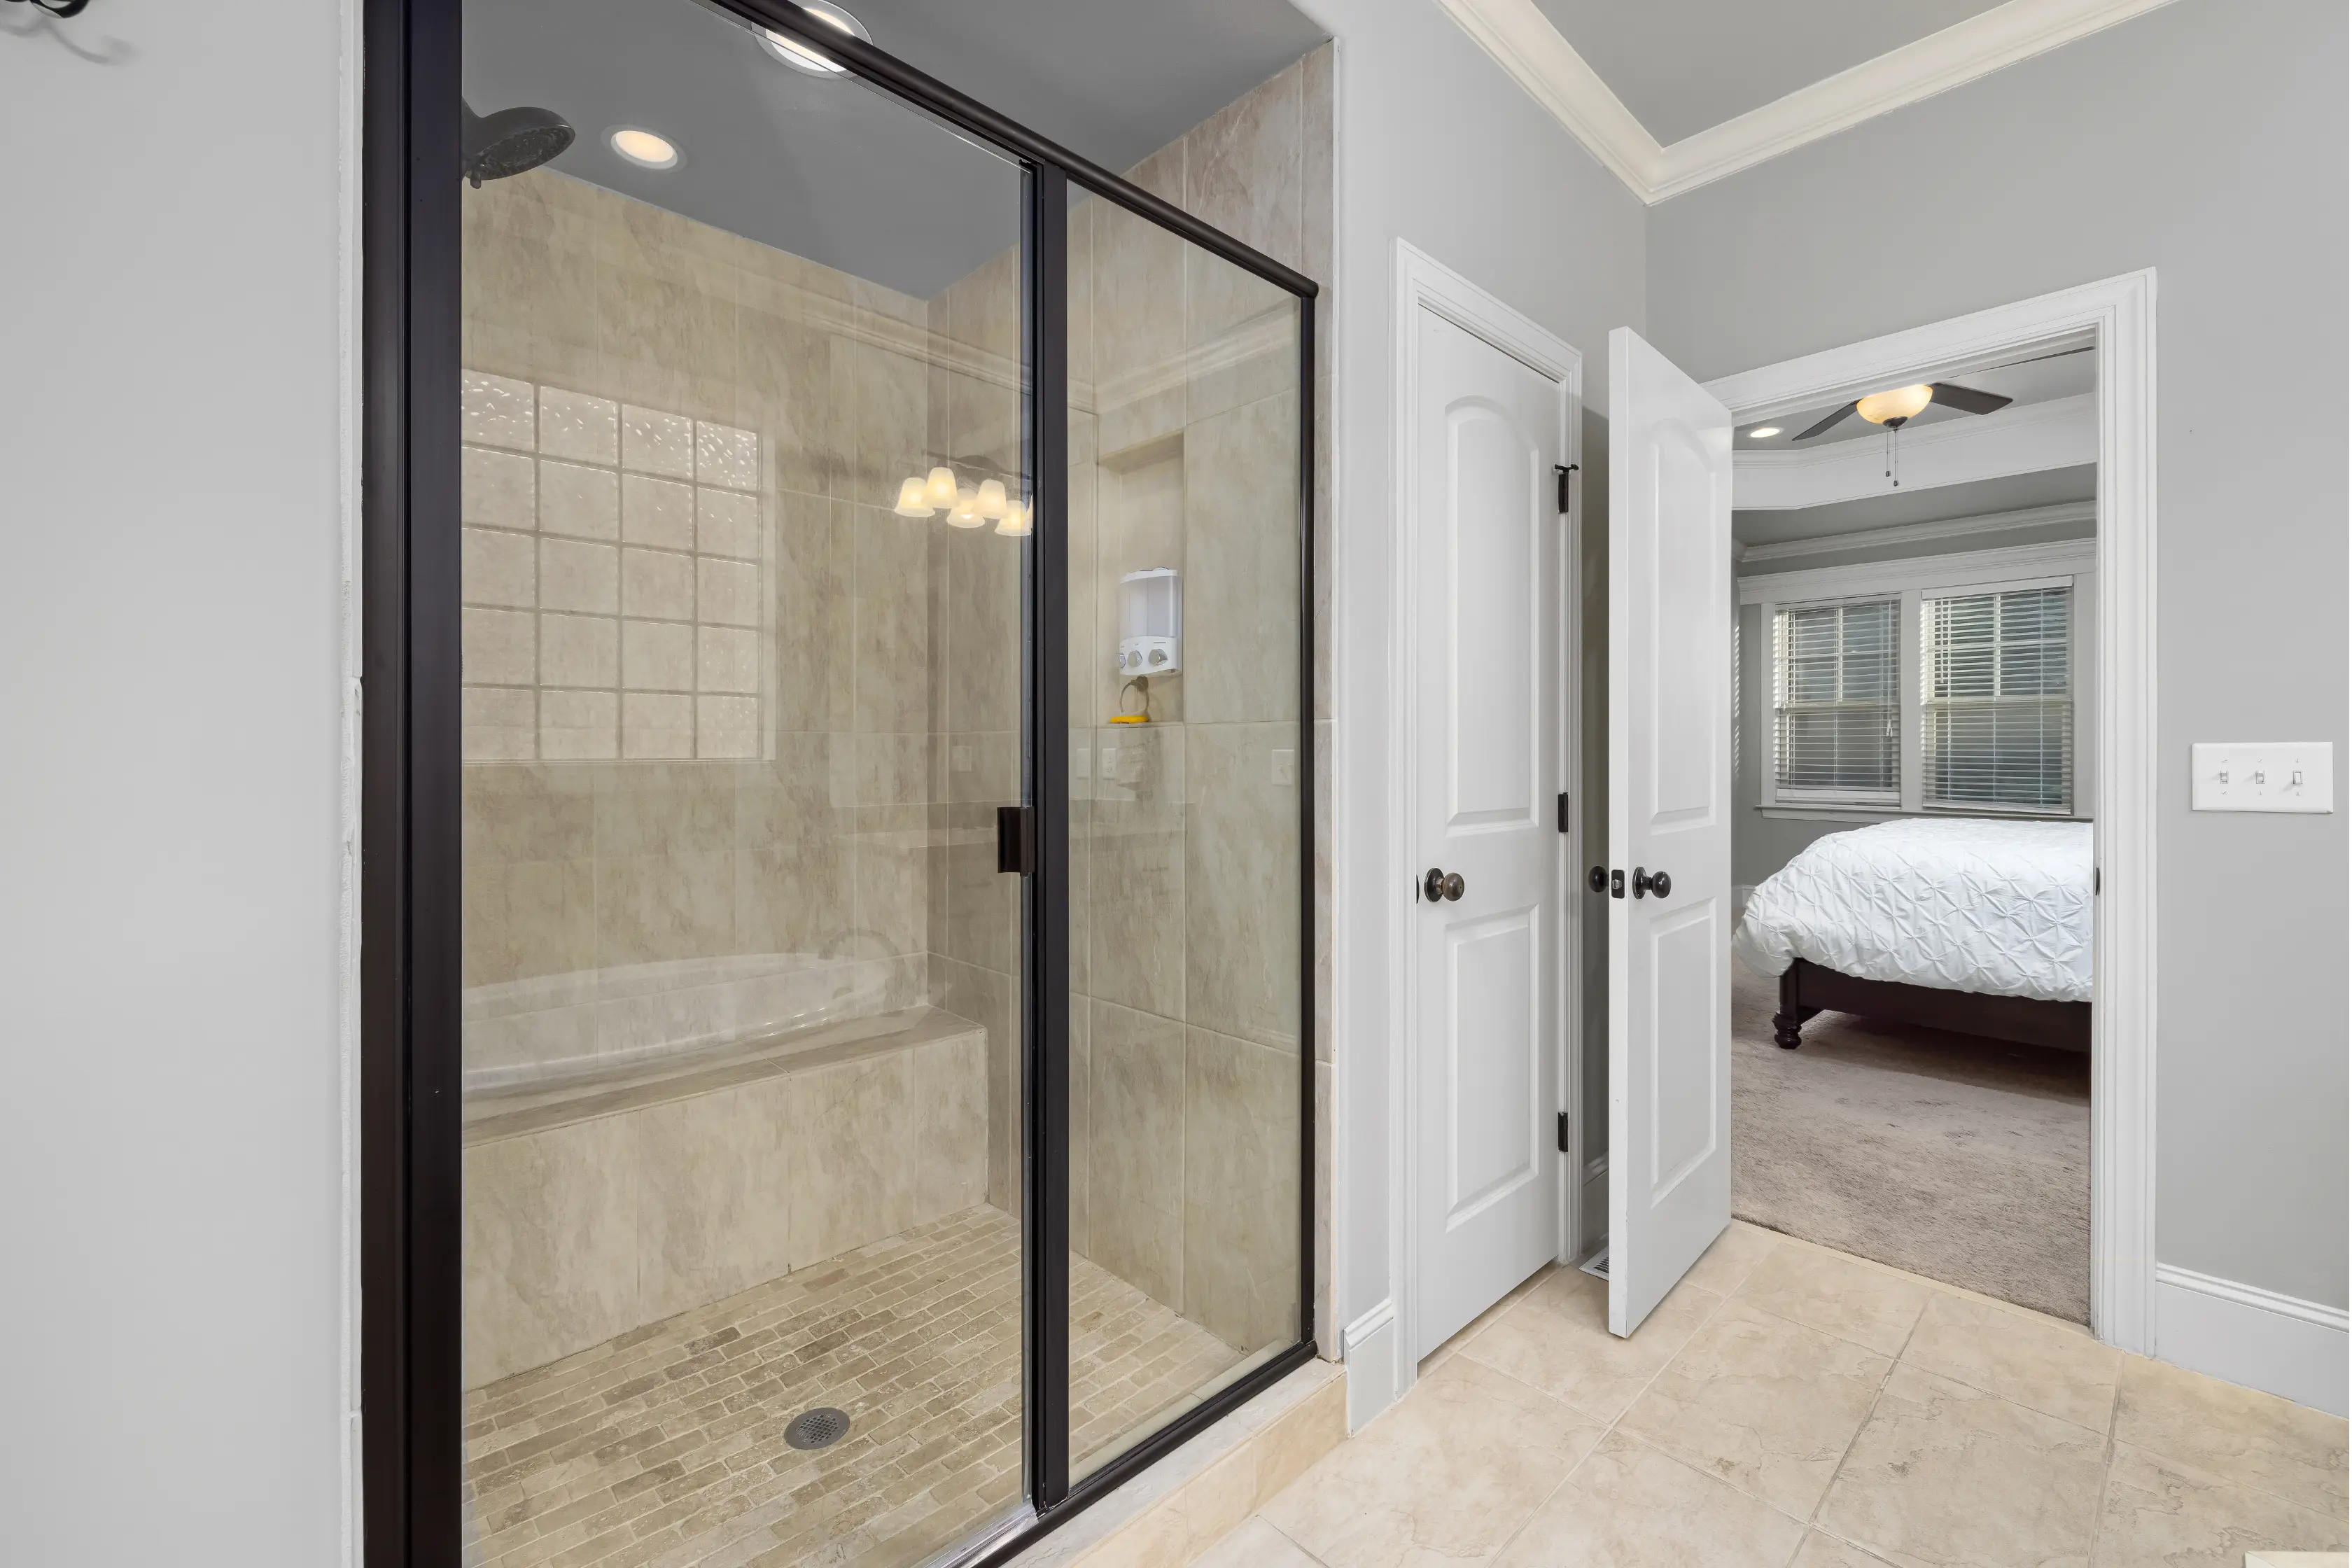 Stylish Shower Room With Brand New Door